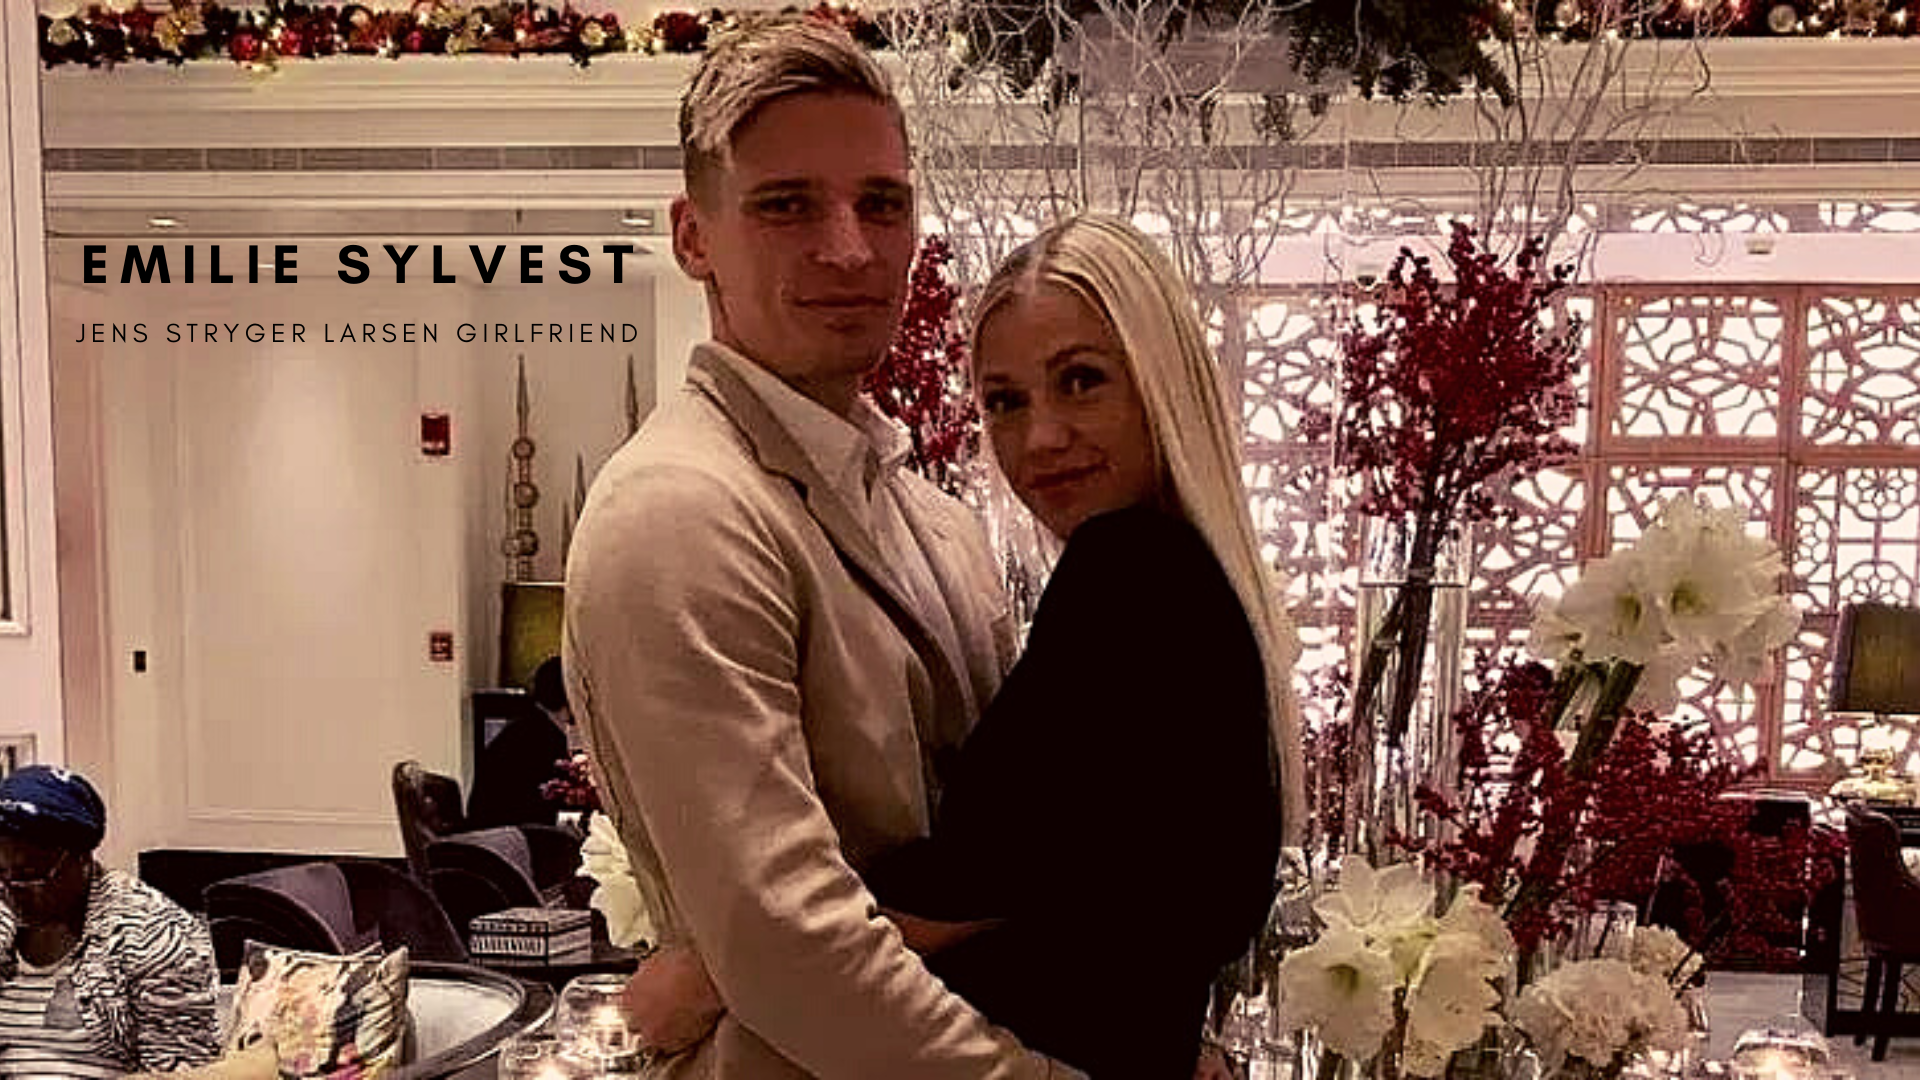 Jens Stryger Larsen with his girlfriend Emilie Sylvest. (Credit: Instagram)